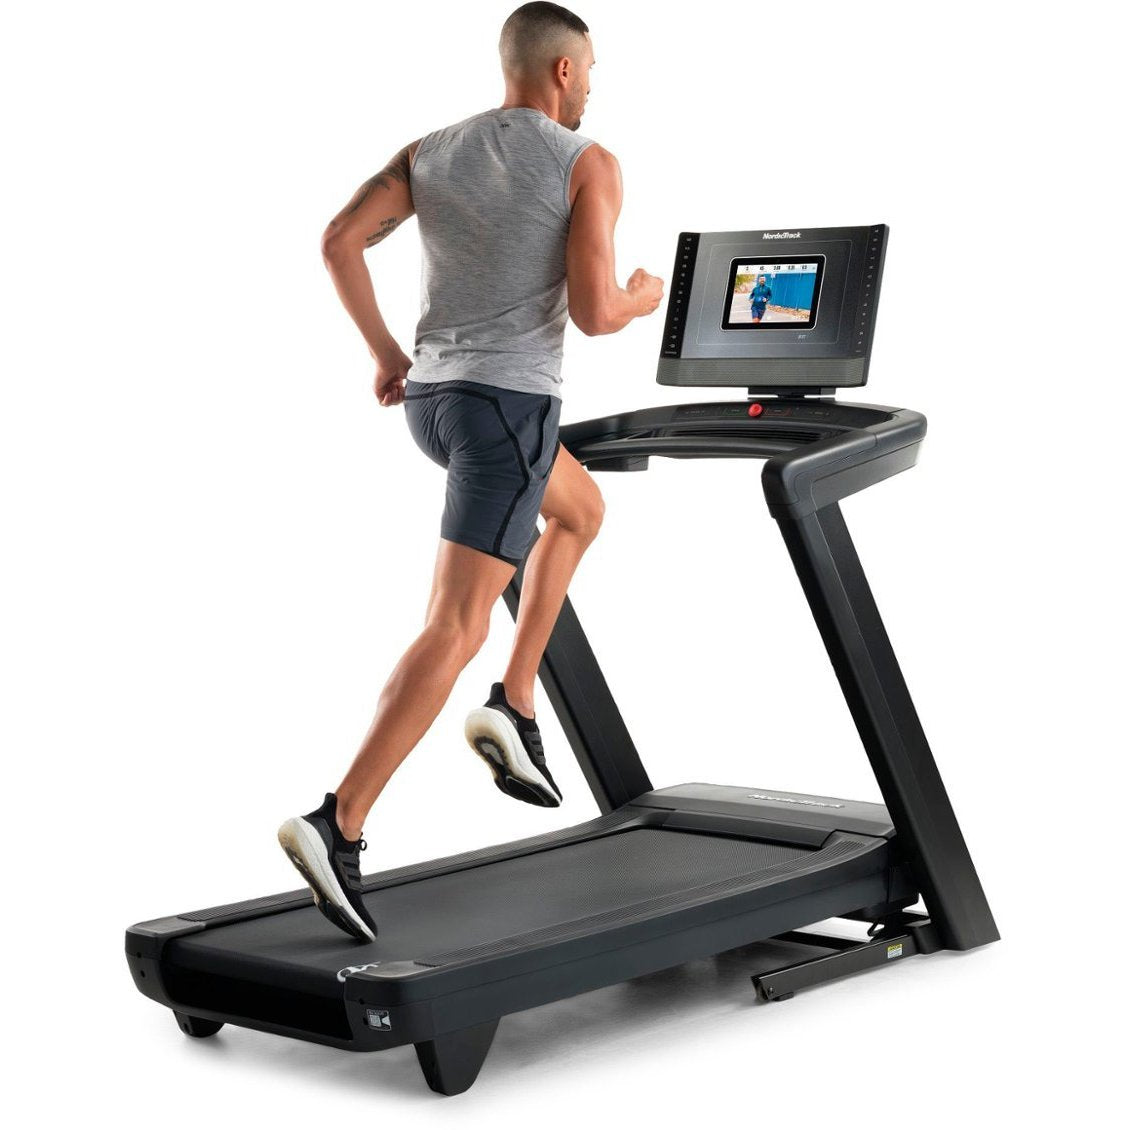 NordicTrack - Treadmill 1250 - NTL14124